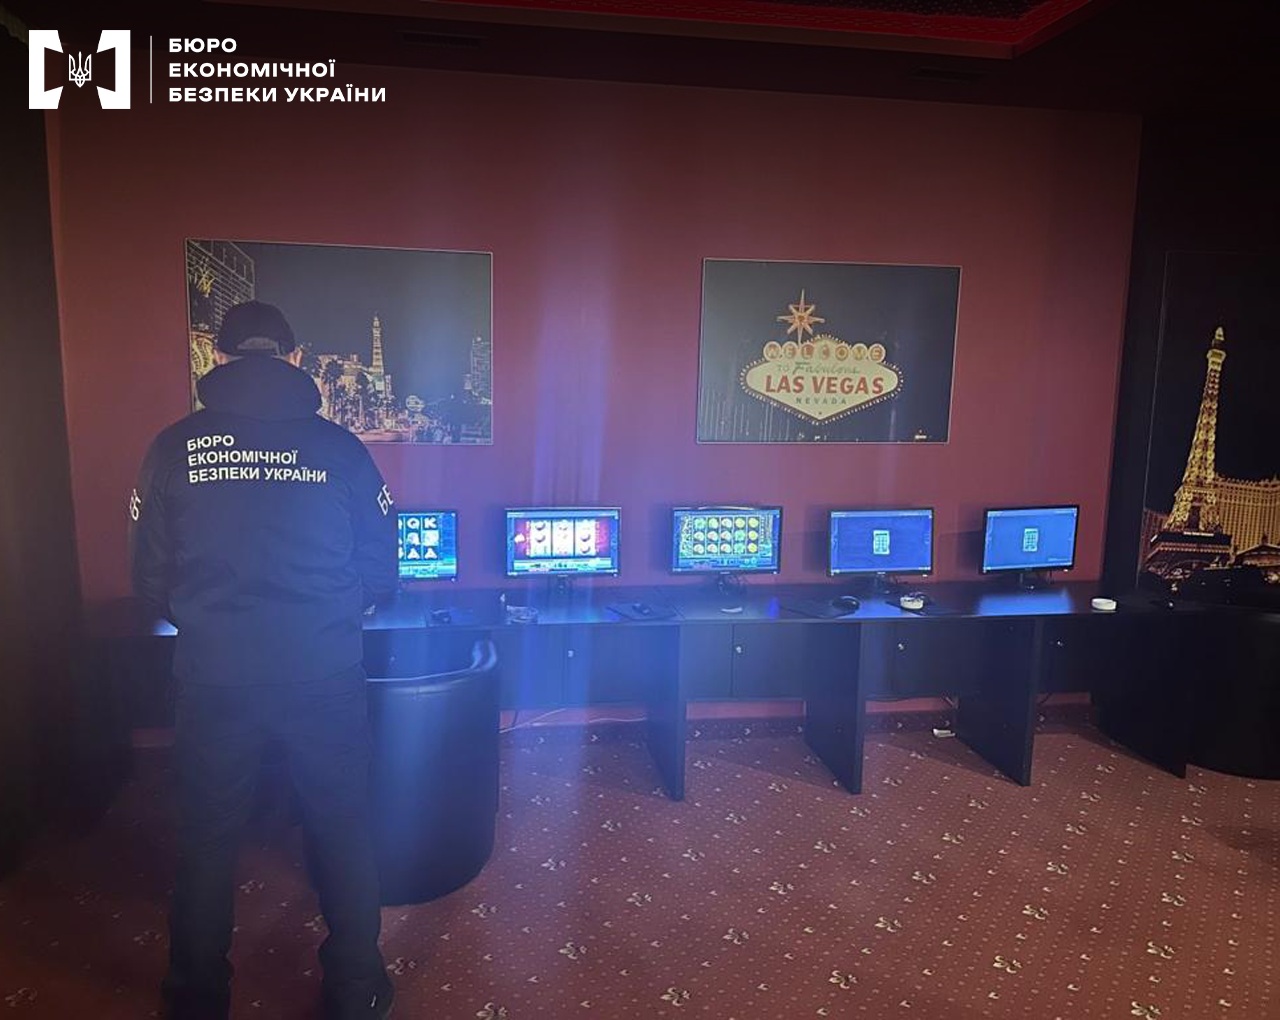  Онлайн казино в ужгородському готелі: БЕБ припинило роботу нелегального закладу 0